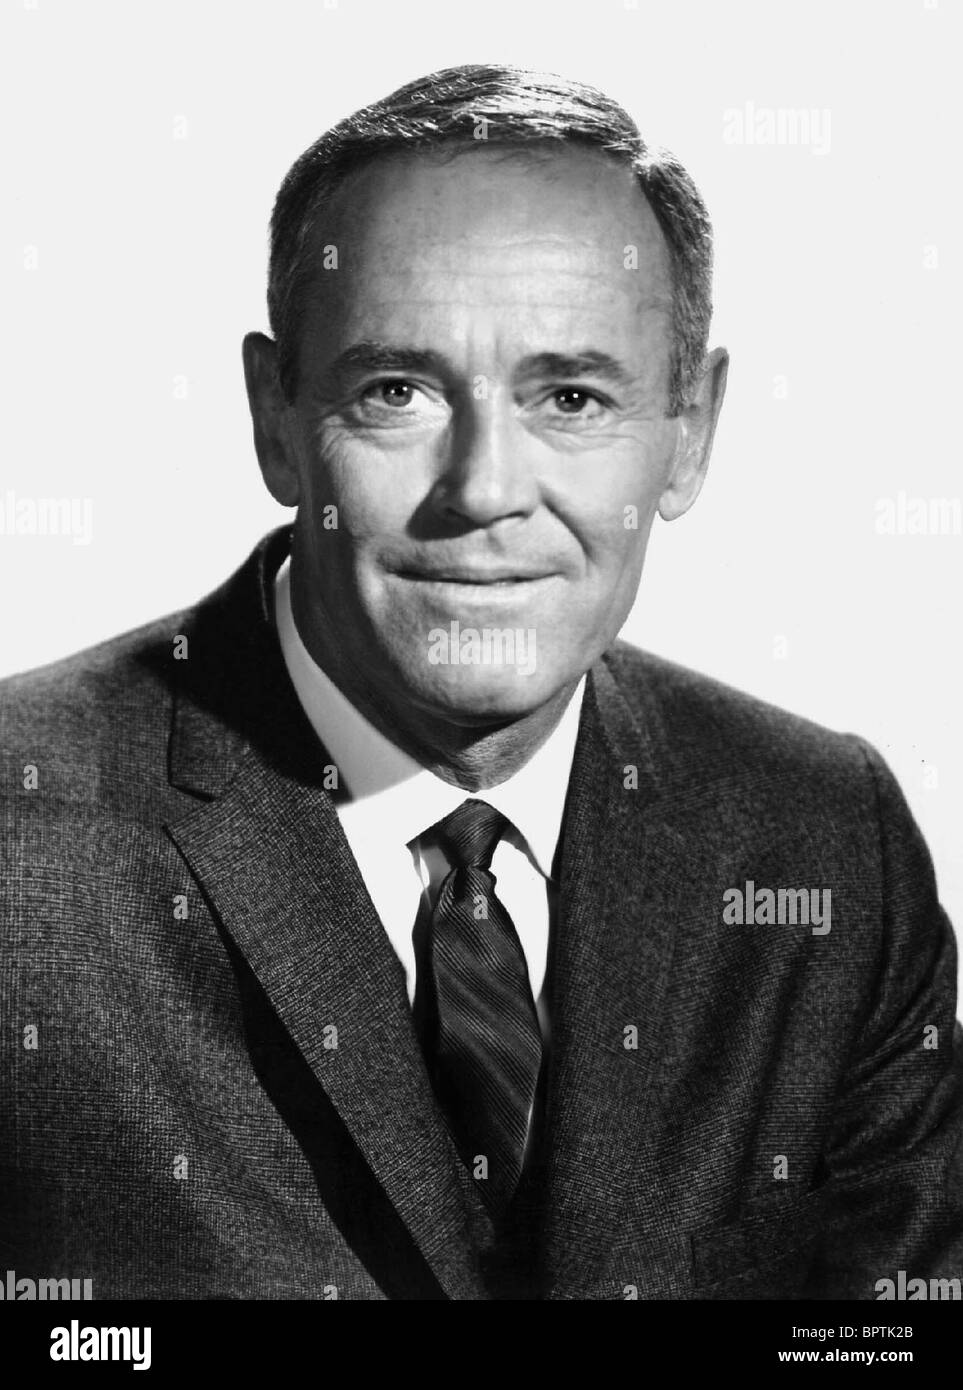 henry-fonda-actor-1960-BPTK2B.jpg